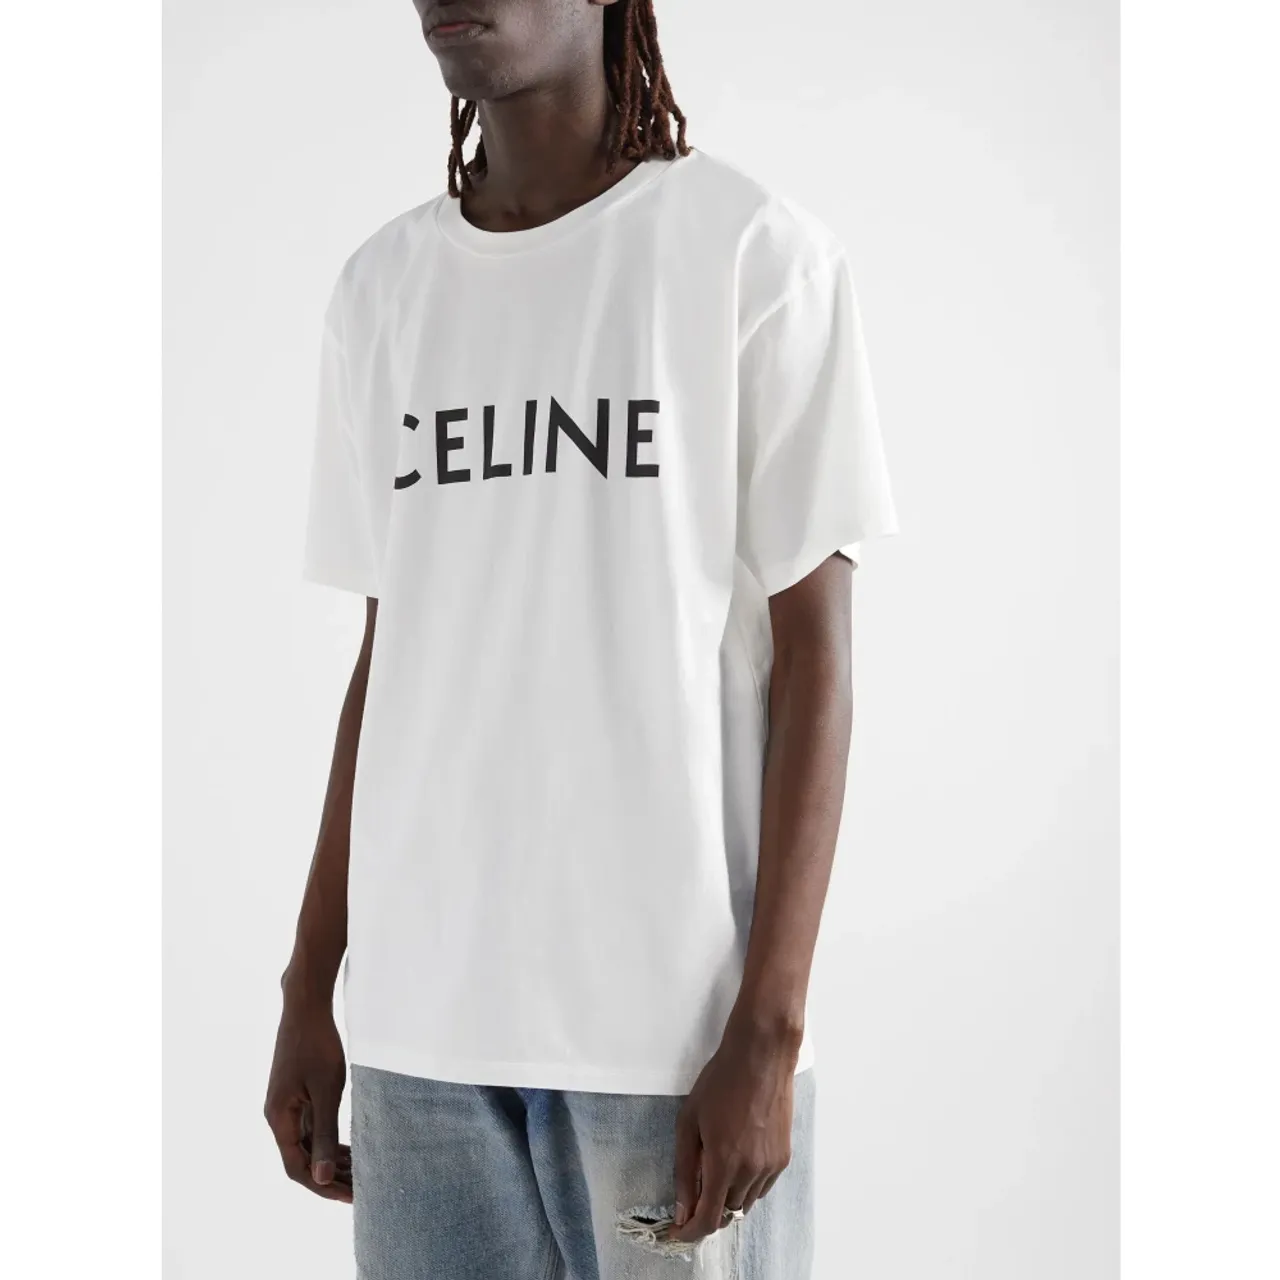 Celine , Iconic White Cotton T-Shirt ,White male, Sizes: